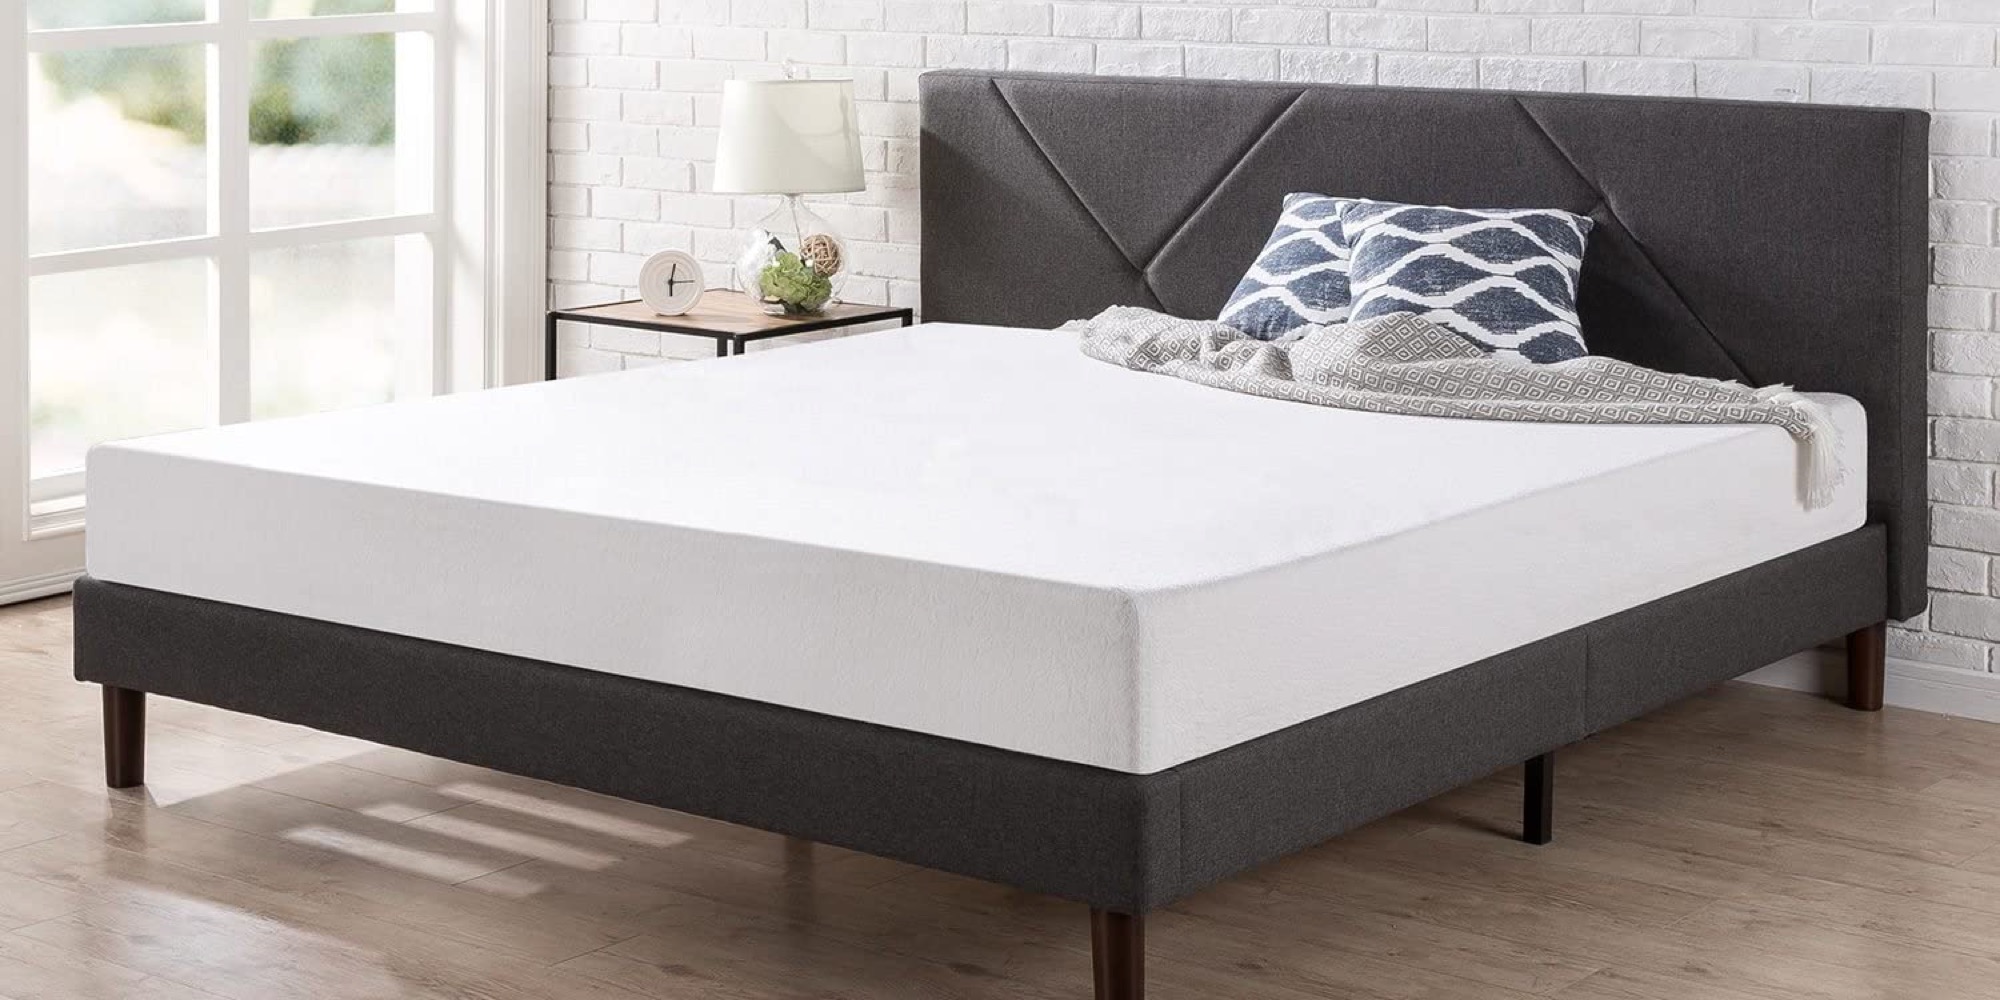 mattresses for zinus bed frame